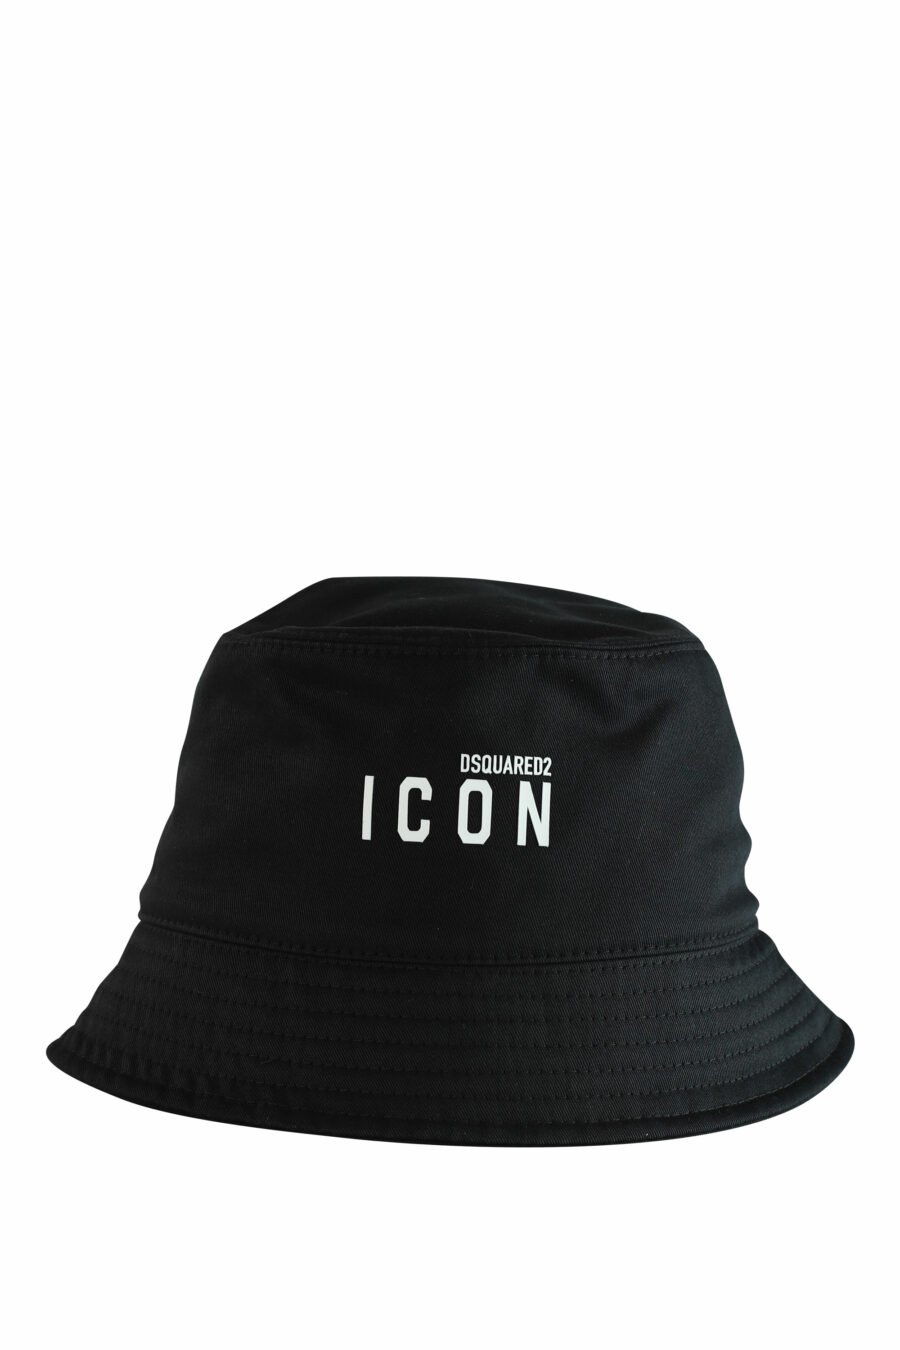 Black fisherman's cap with white double "icon" logo - IMG 1242